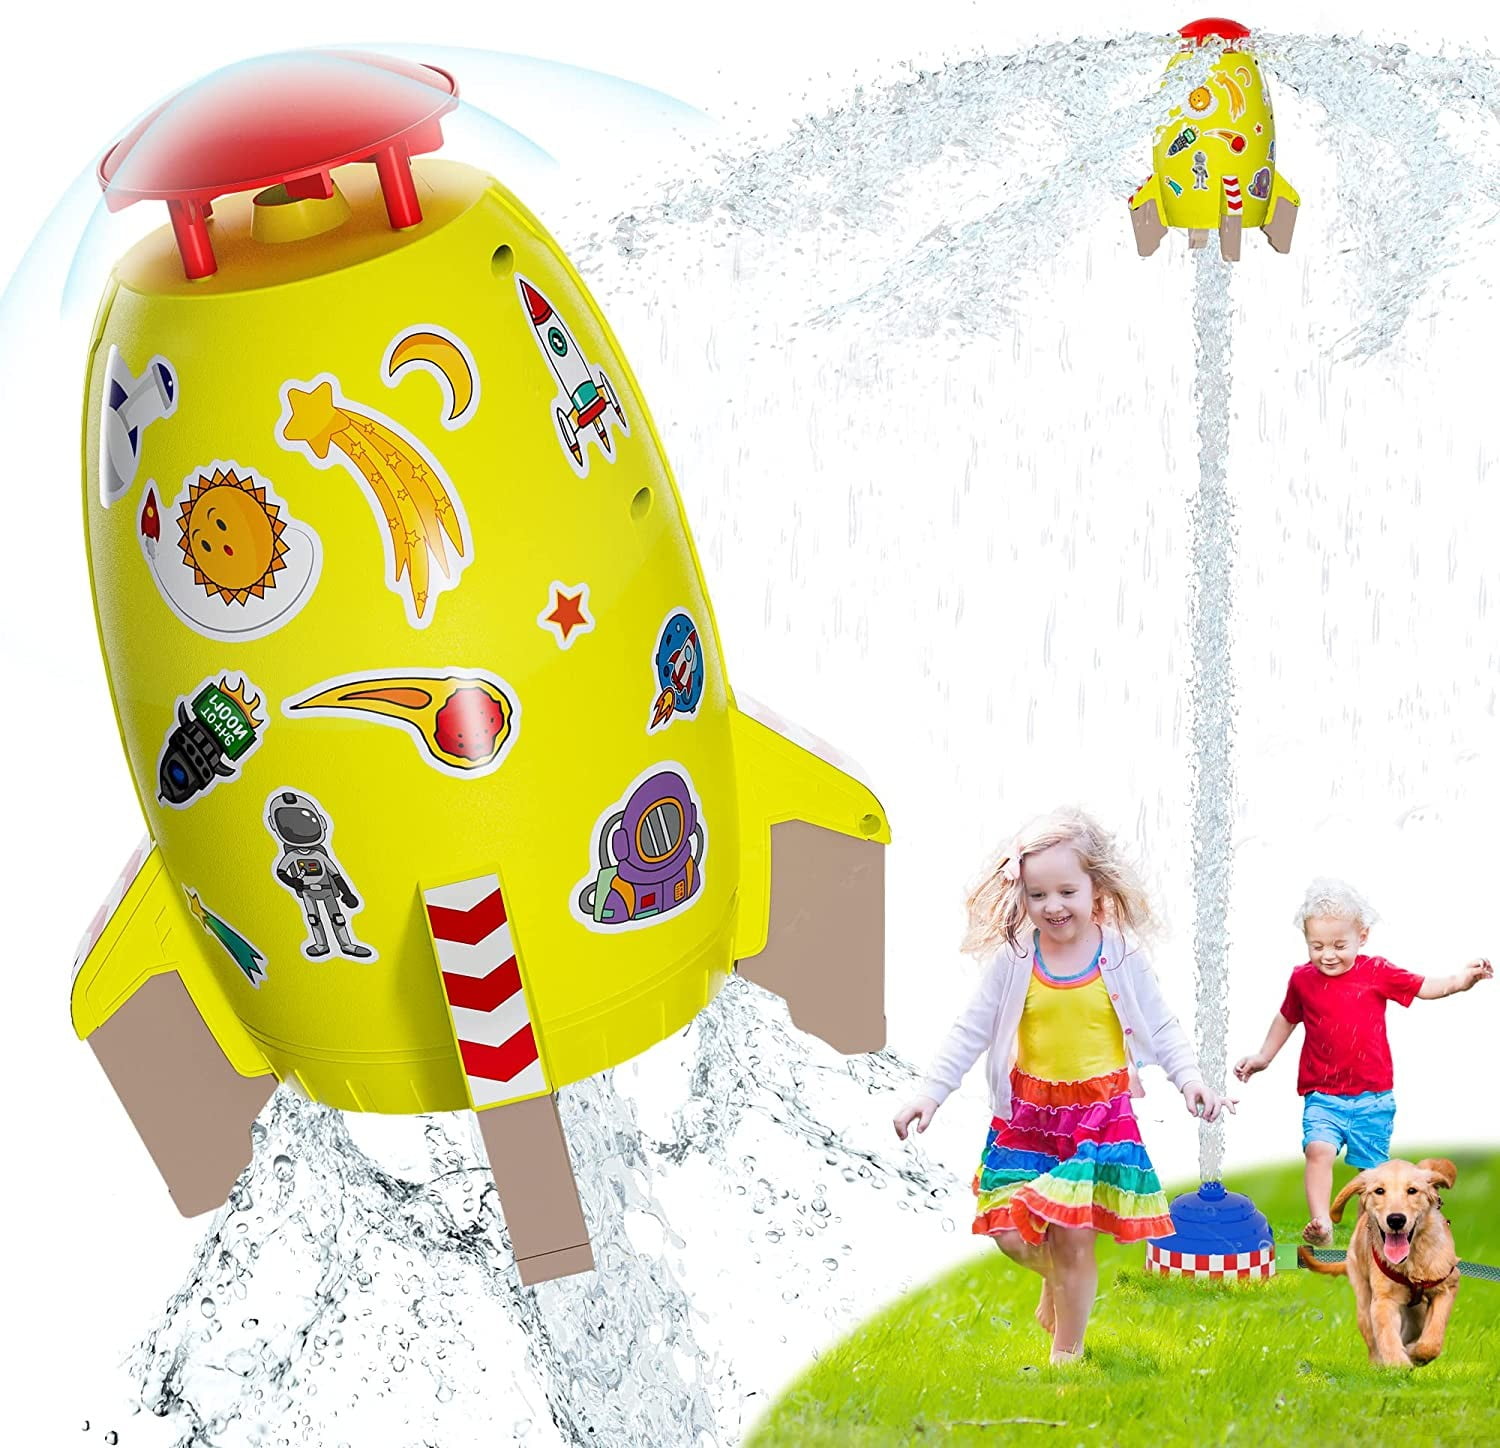 GERI Rocket Toys Rocket Launcher for Kids Outdoor Water Play Rocket ...